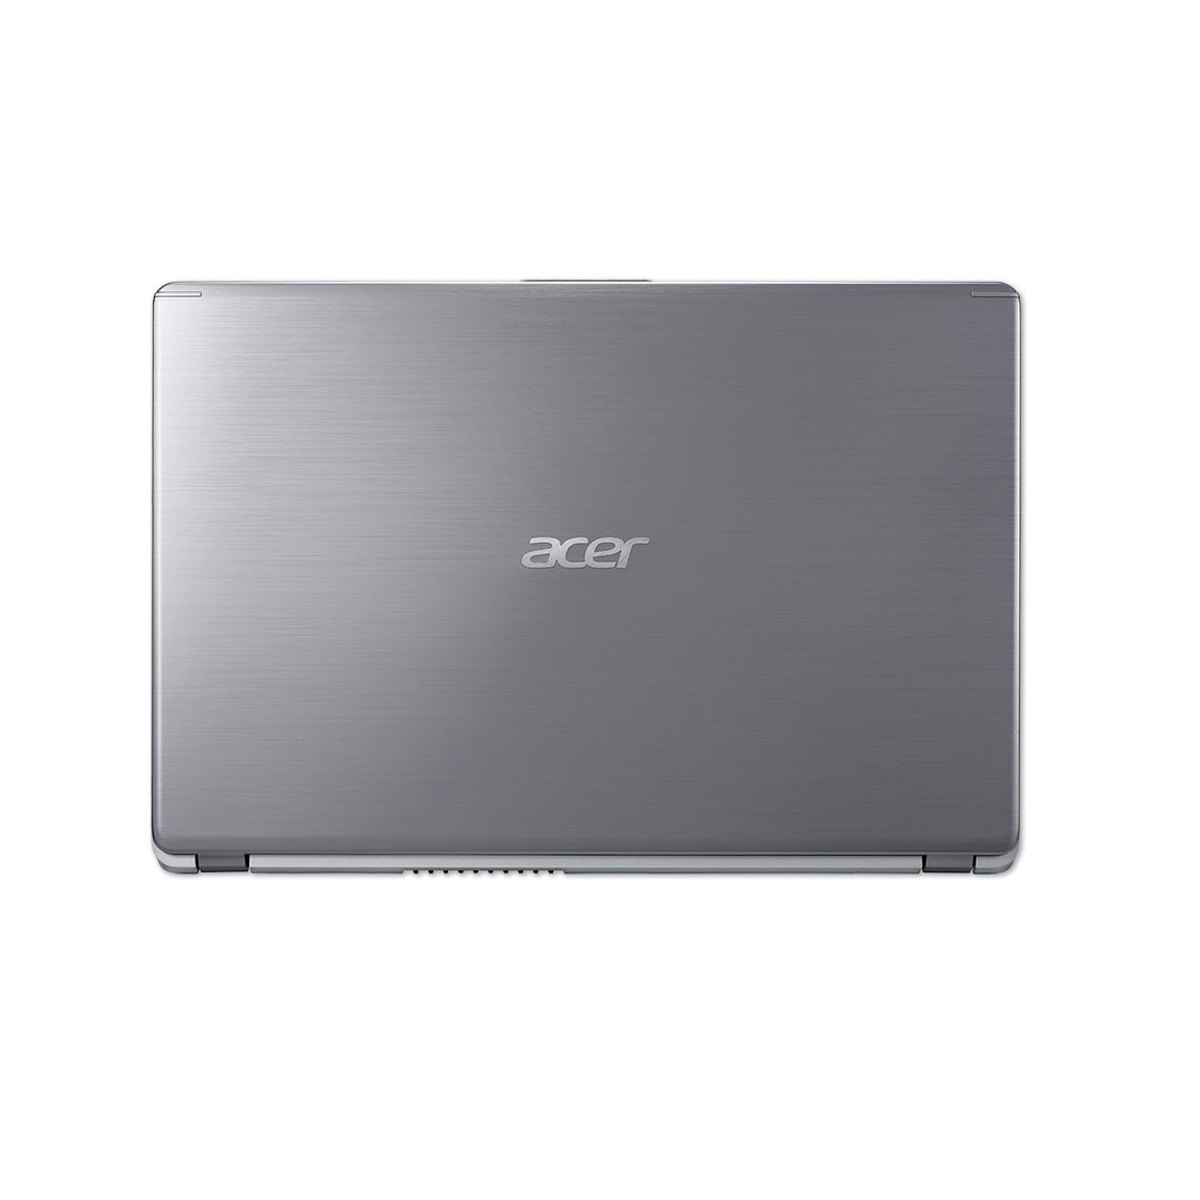 Notebook Acer A515 Core I5 8265u Memoria 8gb Ddr4 Ssd 240gb Tela 15.6' Led Hd Sistema Windows 10 Home 